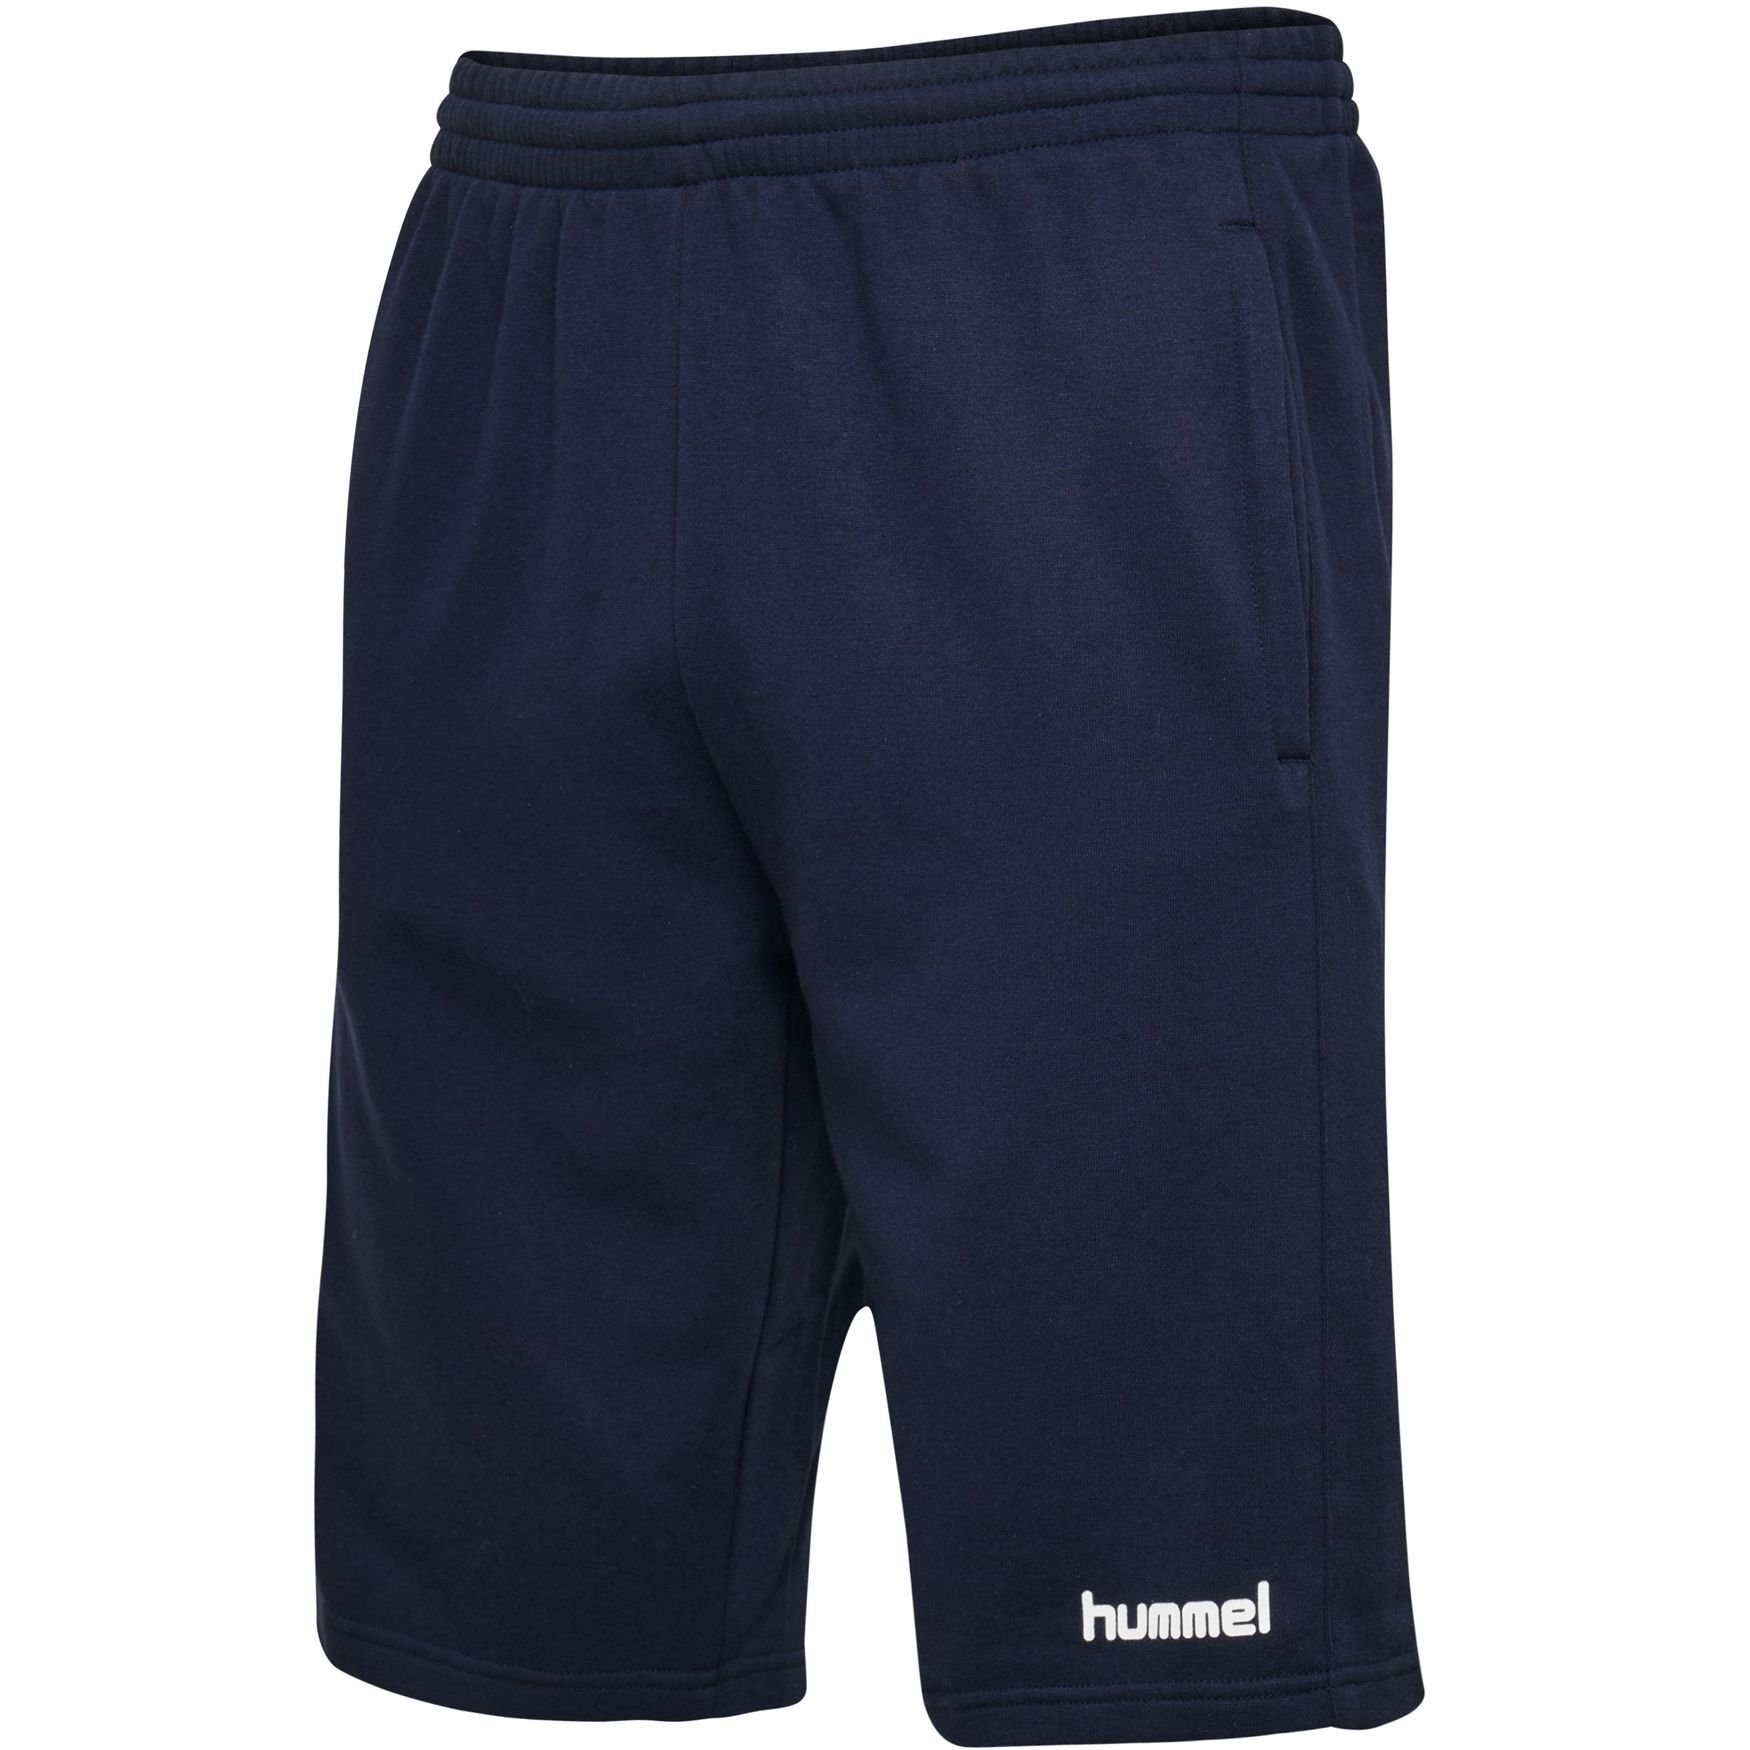 5144 Blau Sweat Pants in hummel HMLGO Sweatshorts Kurze Shorts Basic Jogginghose